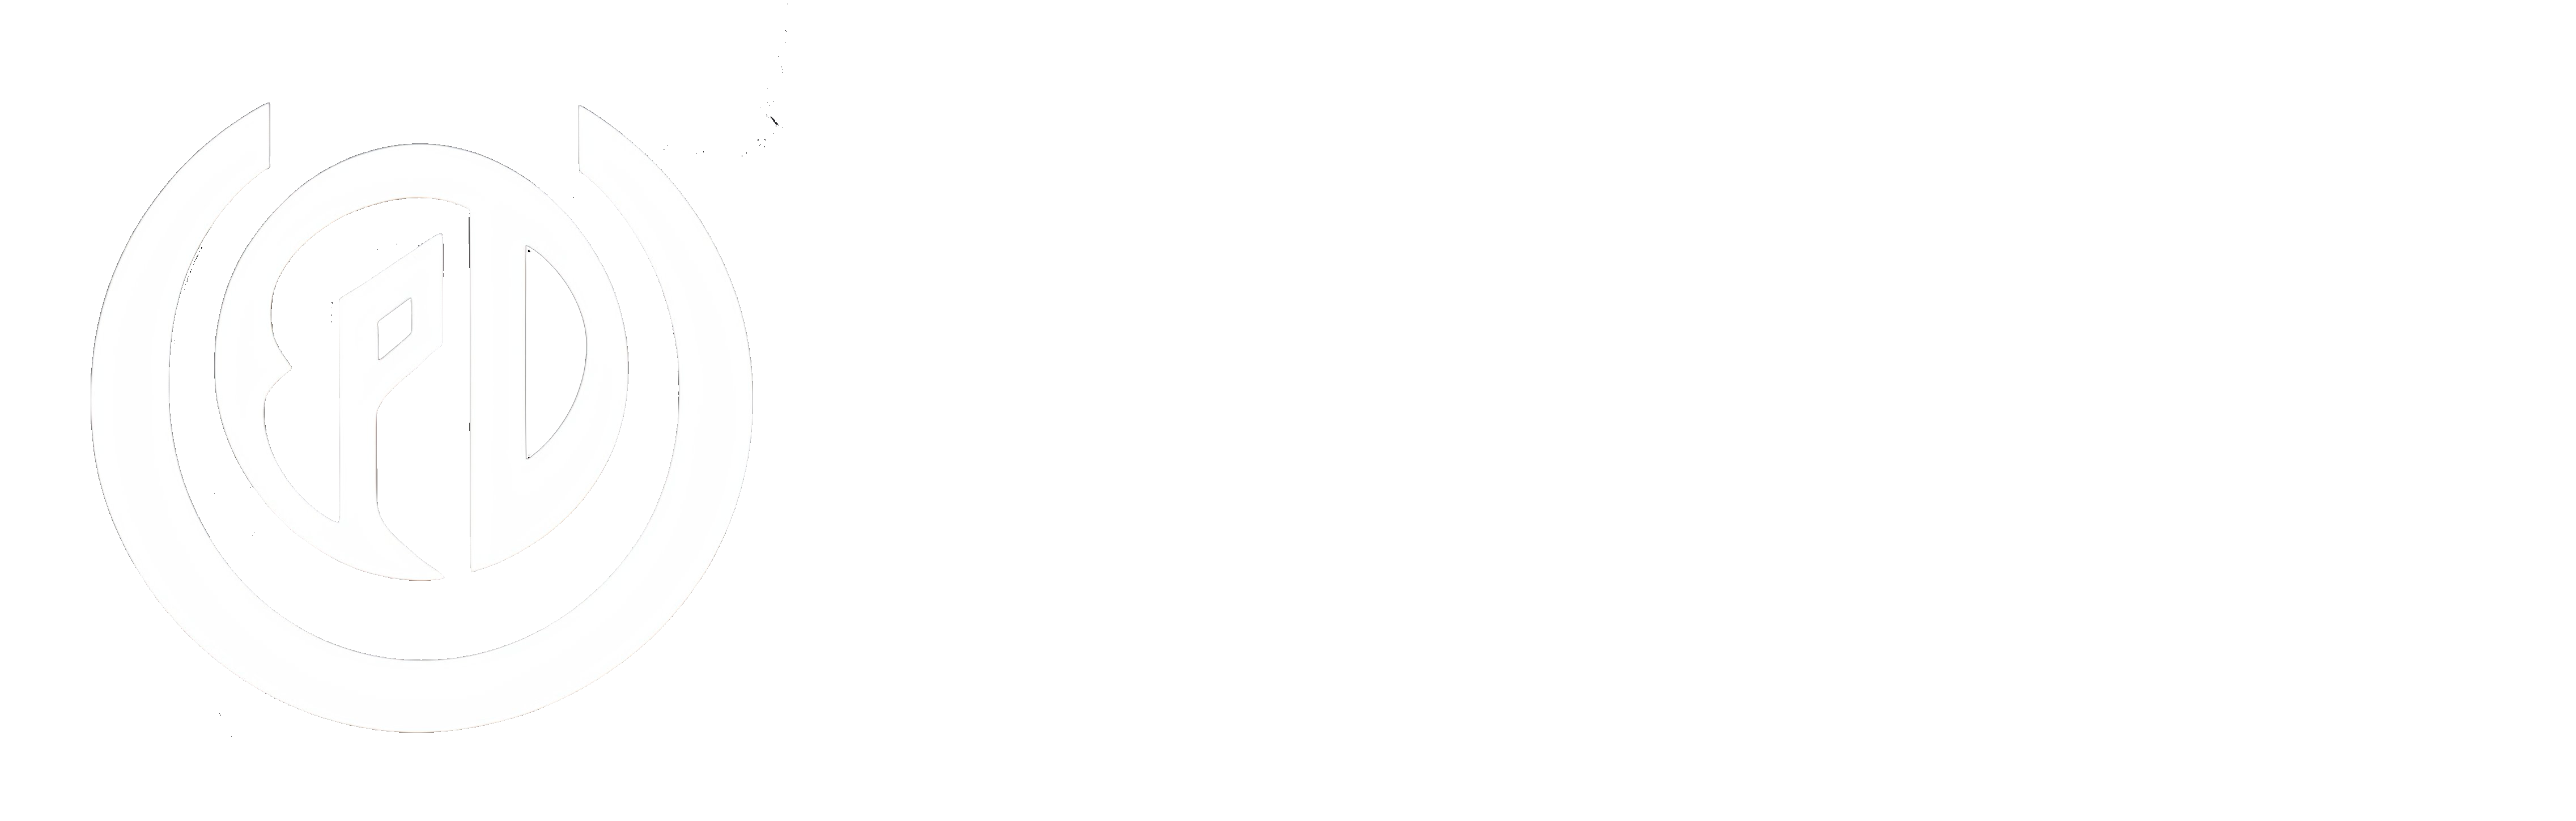 Producción para eventos